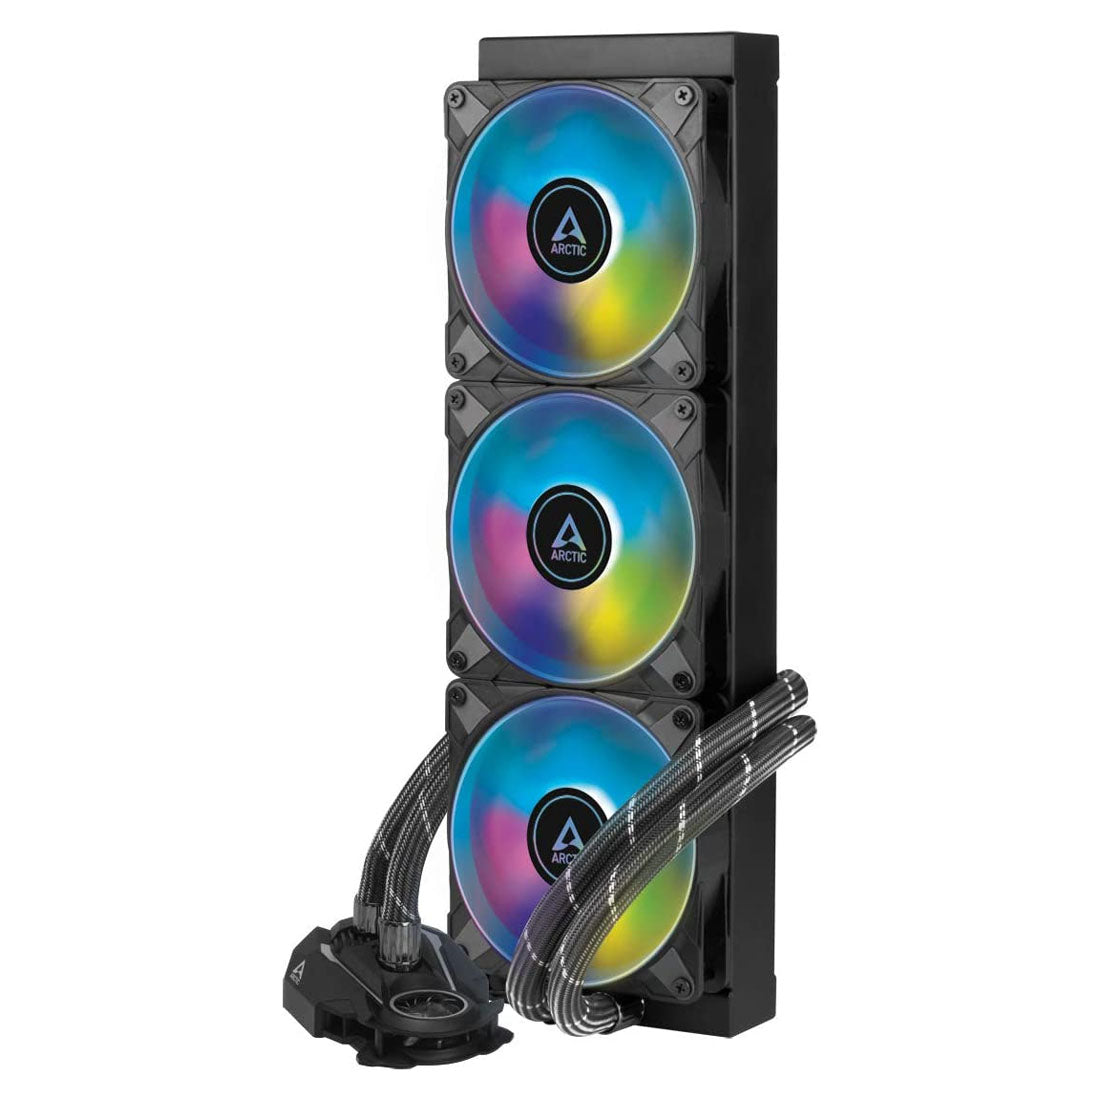 ARCTIC Liquid Freezer II 360 A-RGB 360mm AIO CPU Liquid Cooler with PWM Pump and VRM Fan